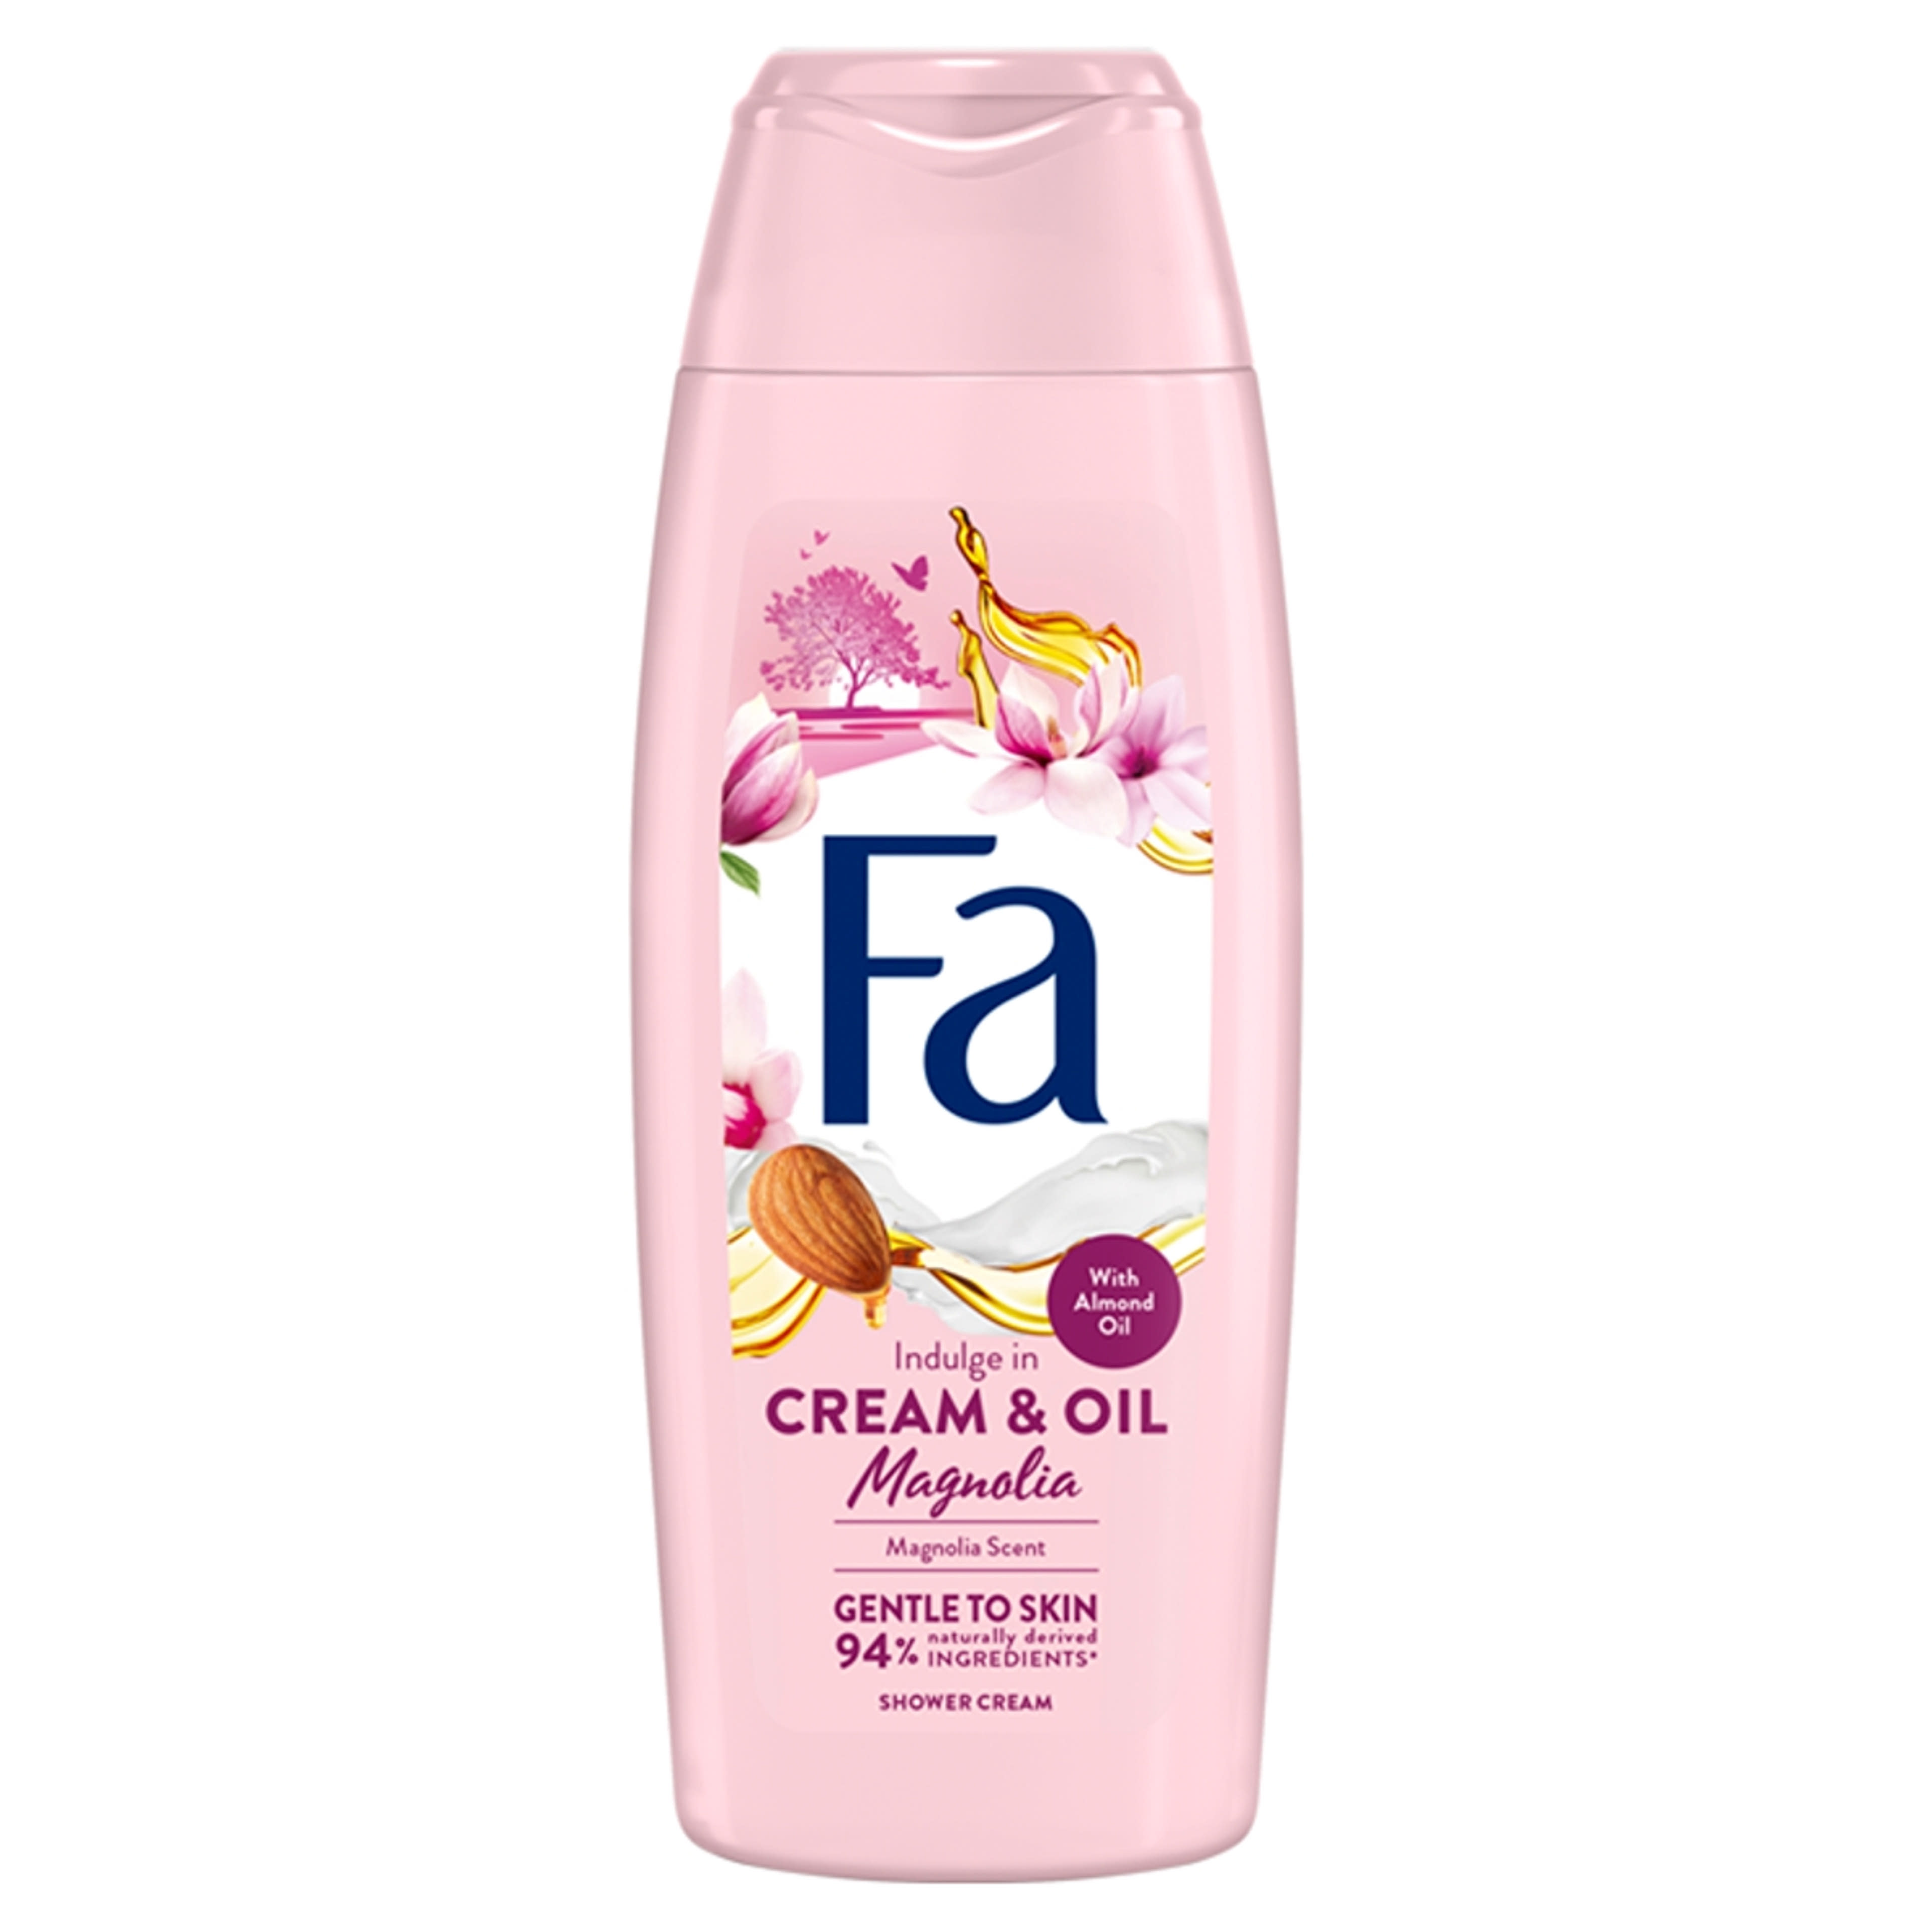 Fa Cream & Oil Magnolia krémtusfürdő magnólia illattal - 400 ml